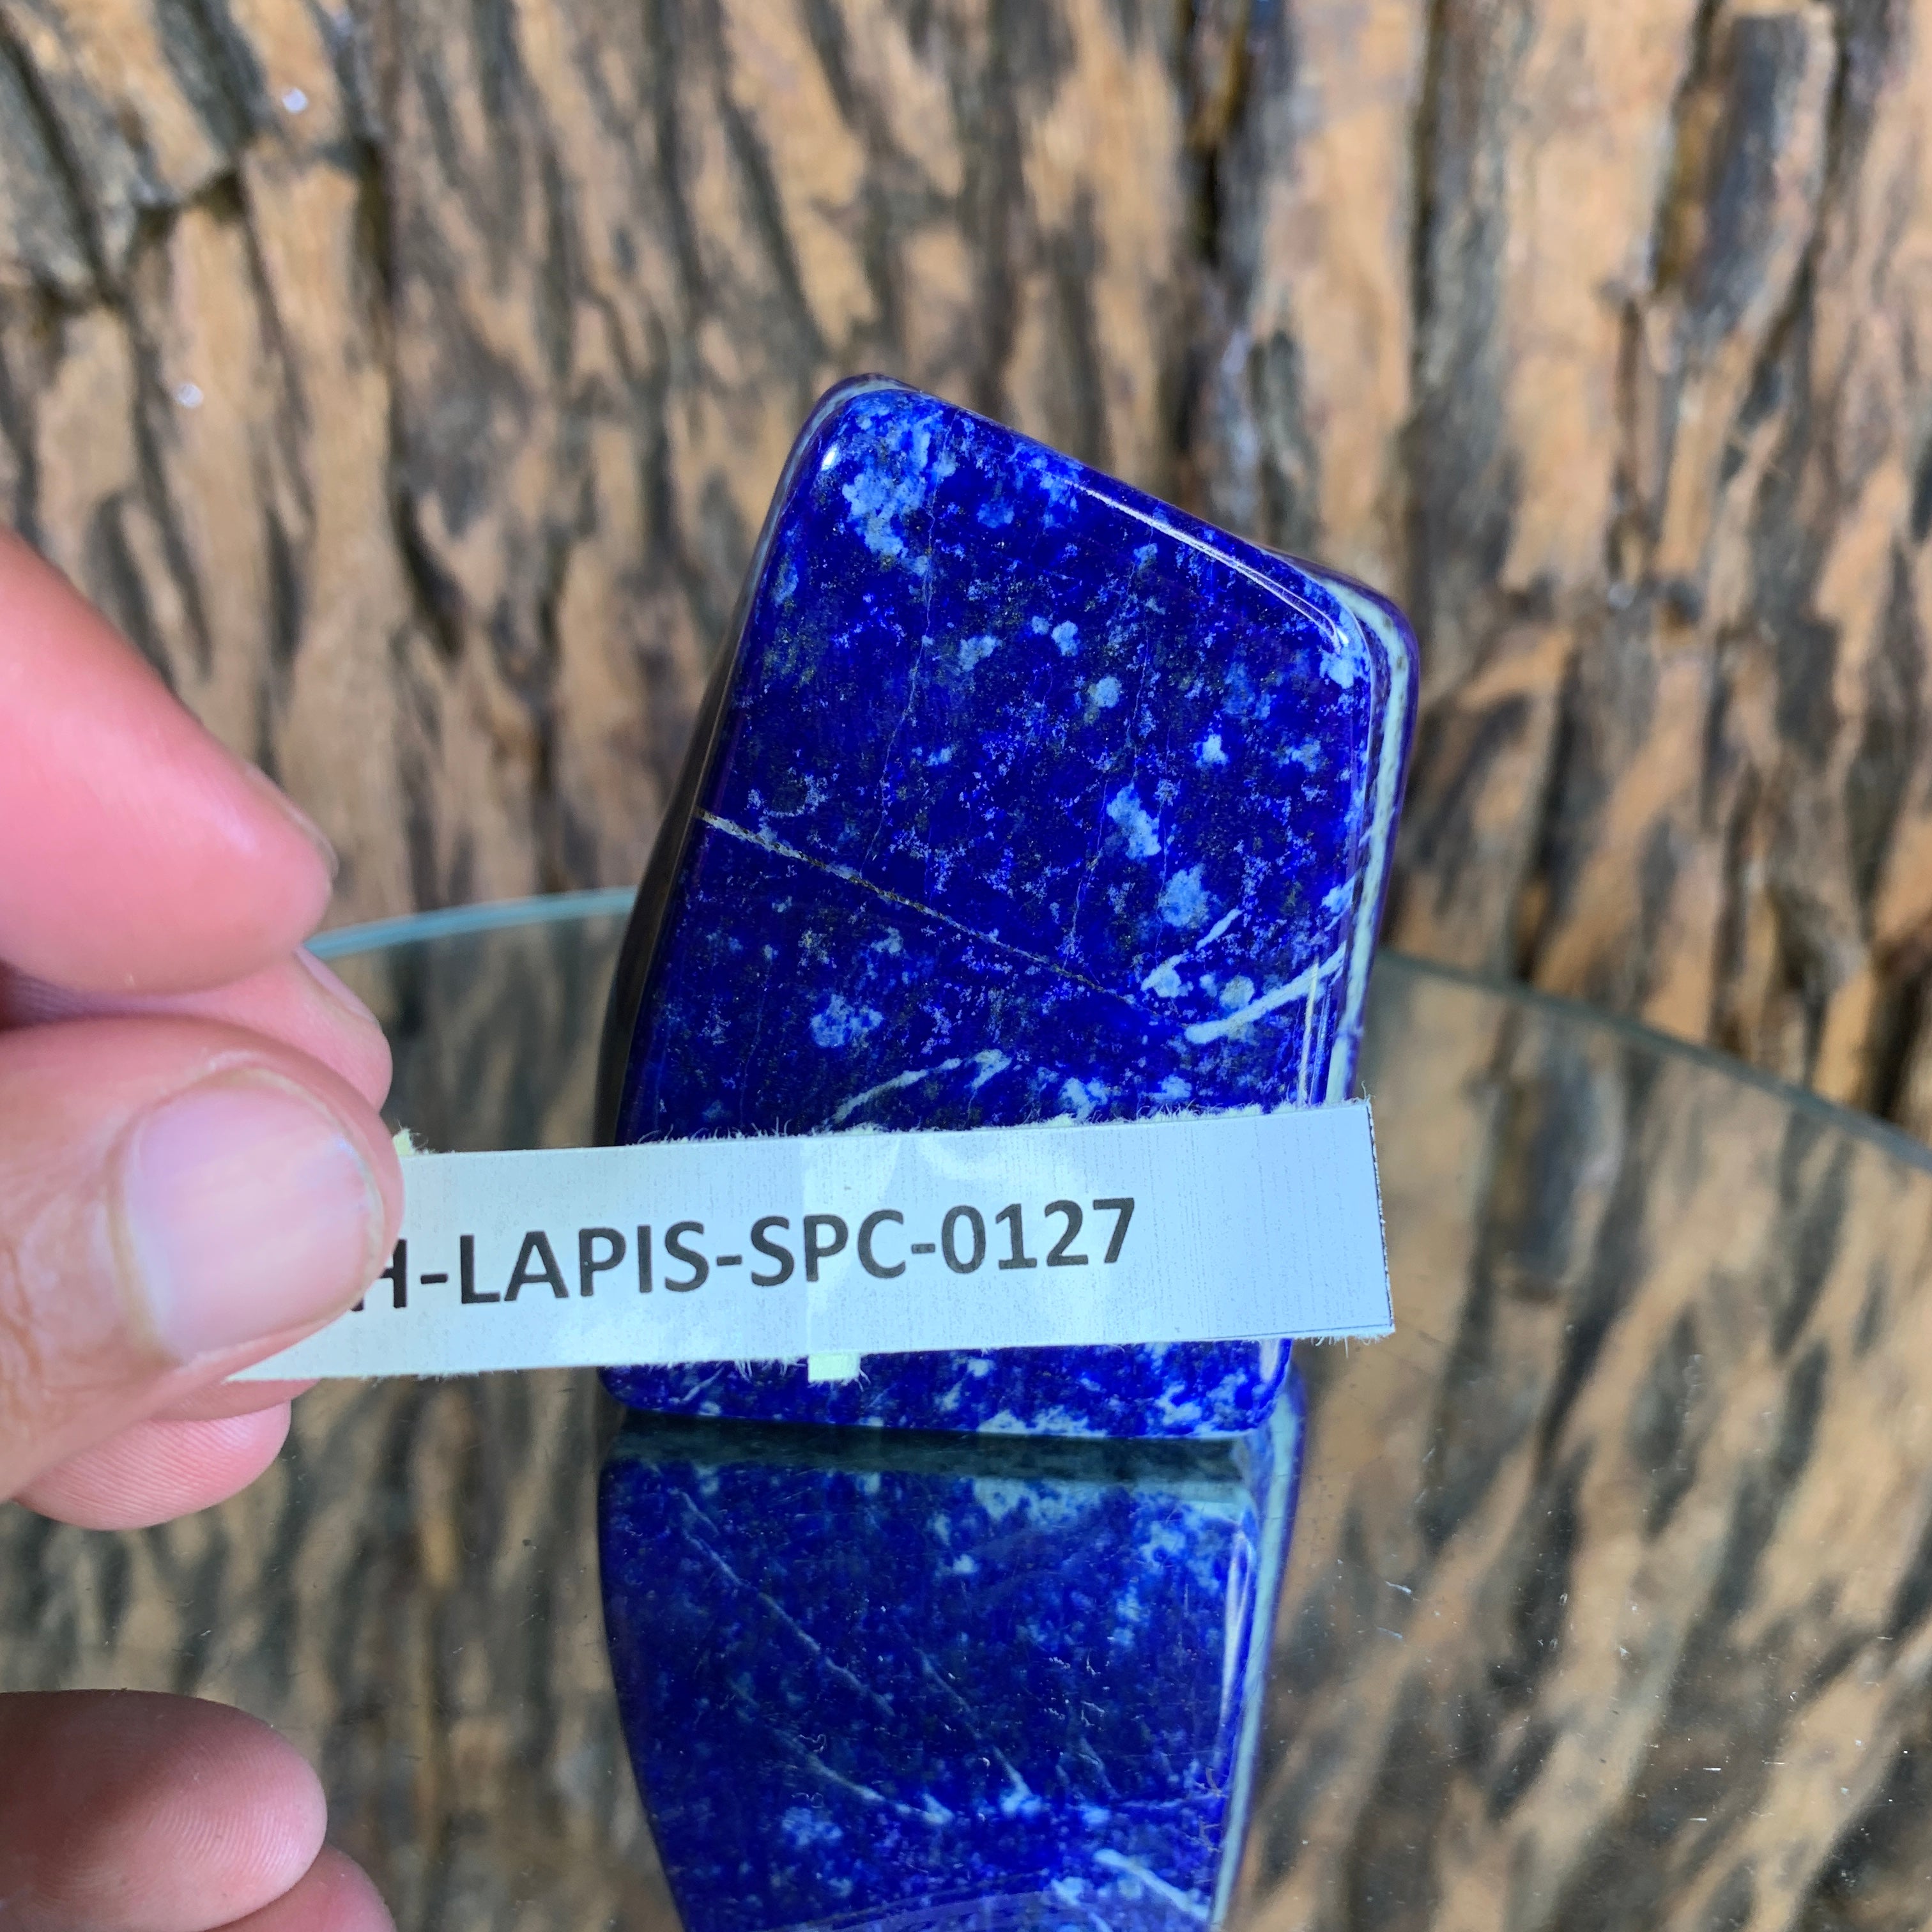 179.0g 6x5x2cm Dark Blue Lapis Lazuli Natural Shape from Afghanistan